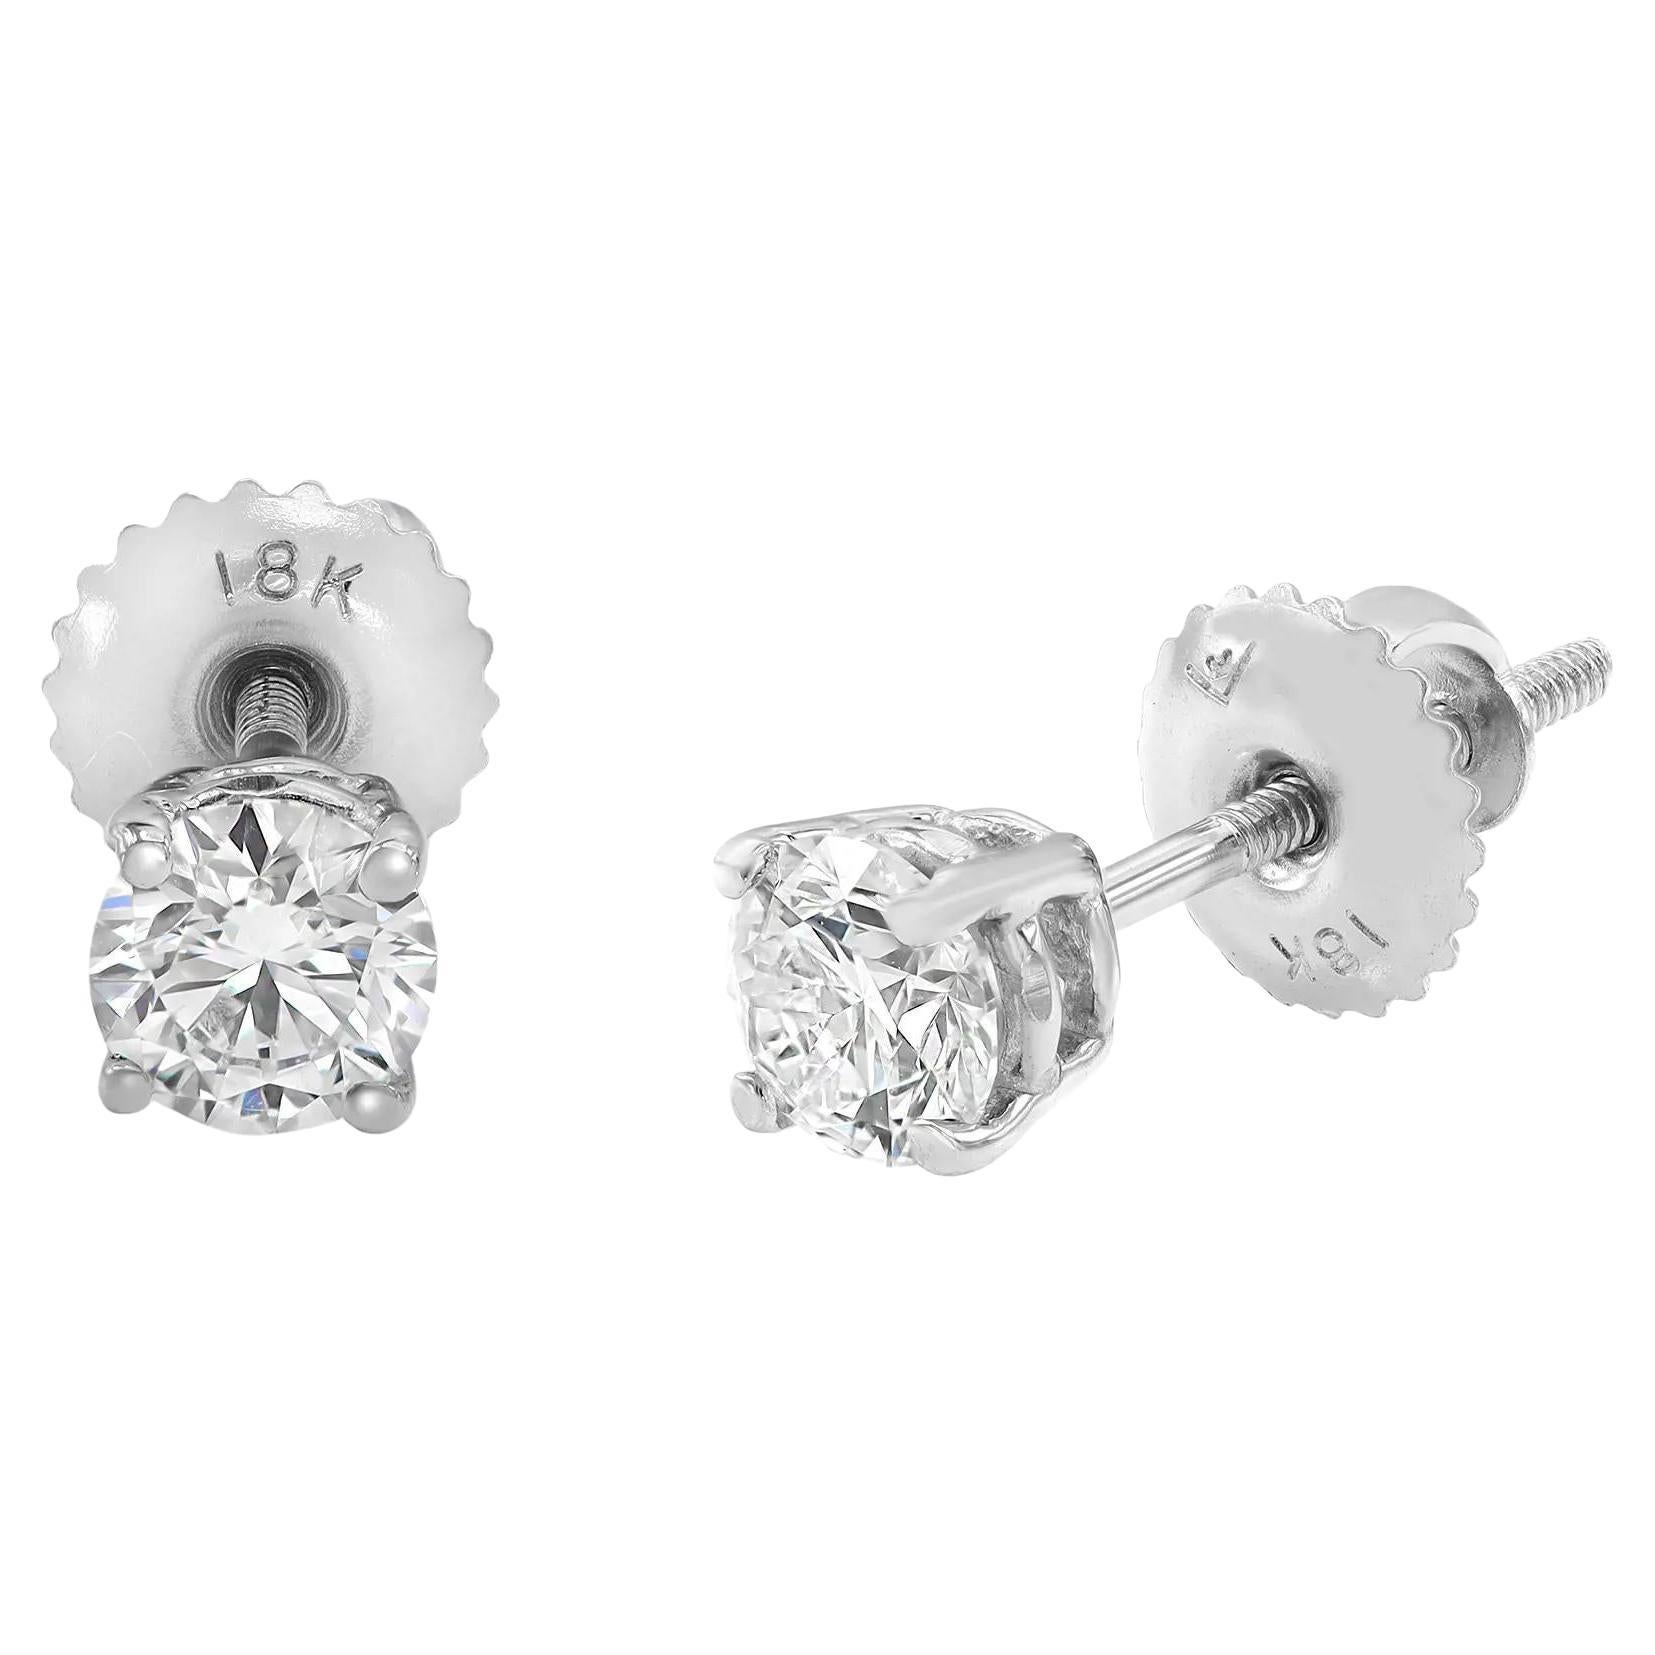 Rachel Koen Round Diamond Solitaire Stud Earrings 18K White Gold 0.70Cttw For Sale